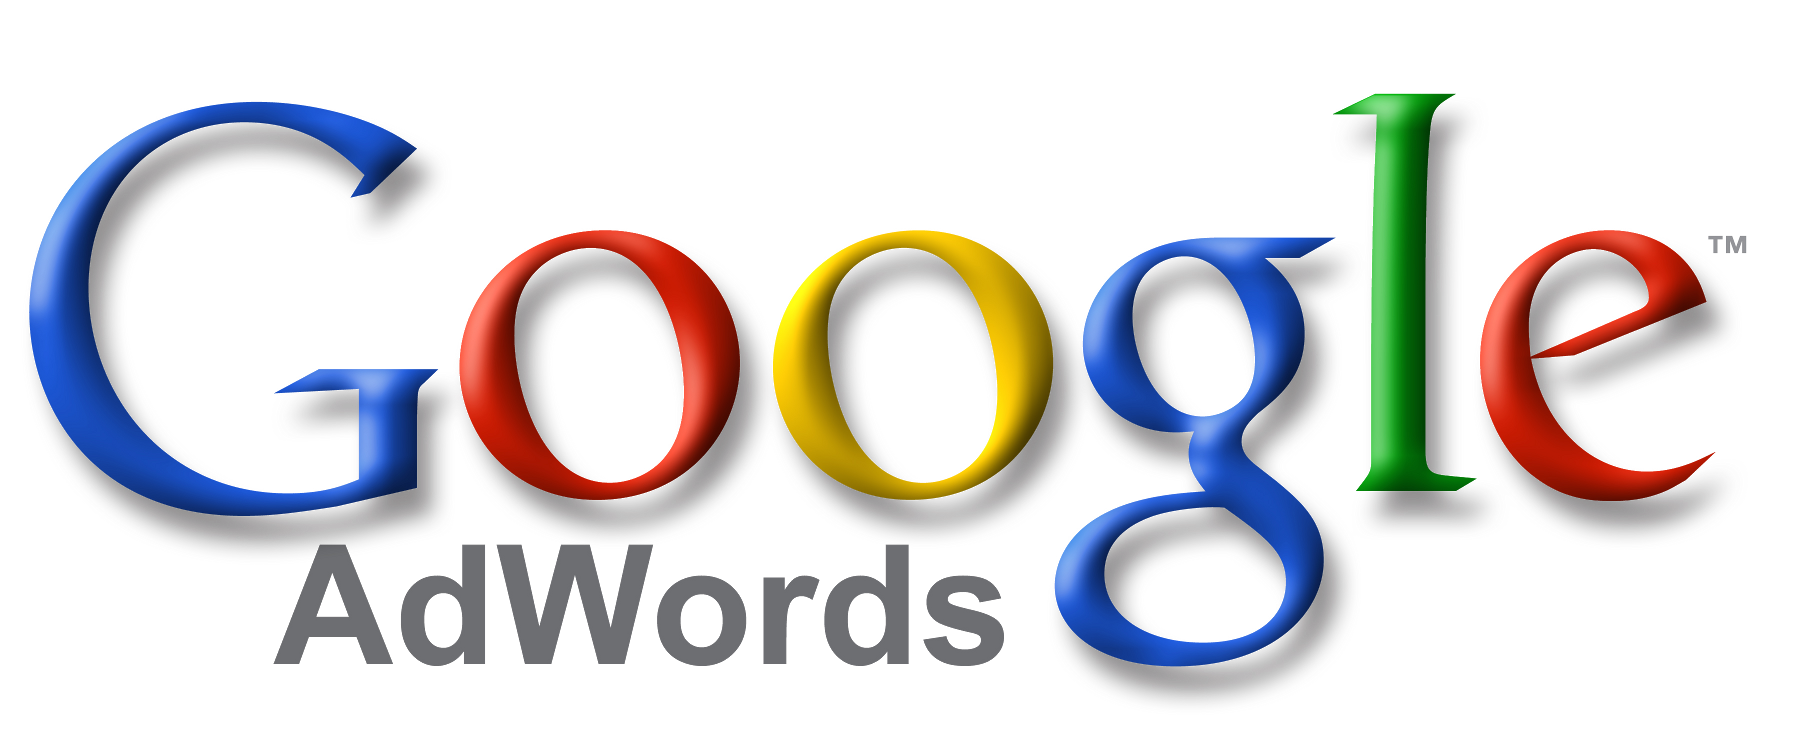 File:logo Google Adwords.png - Google Adwords, Transparent background PNG HD thumbnail